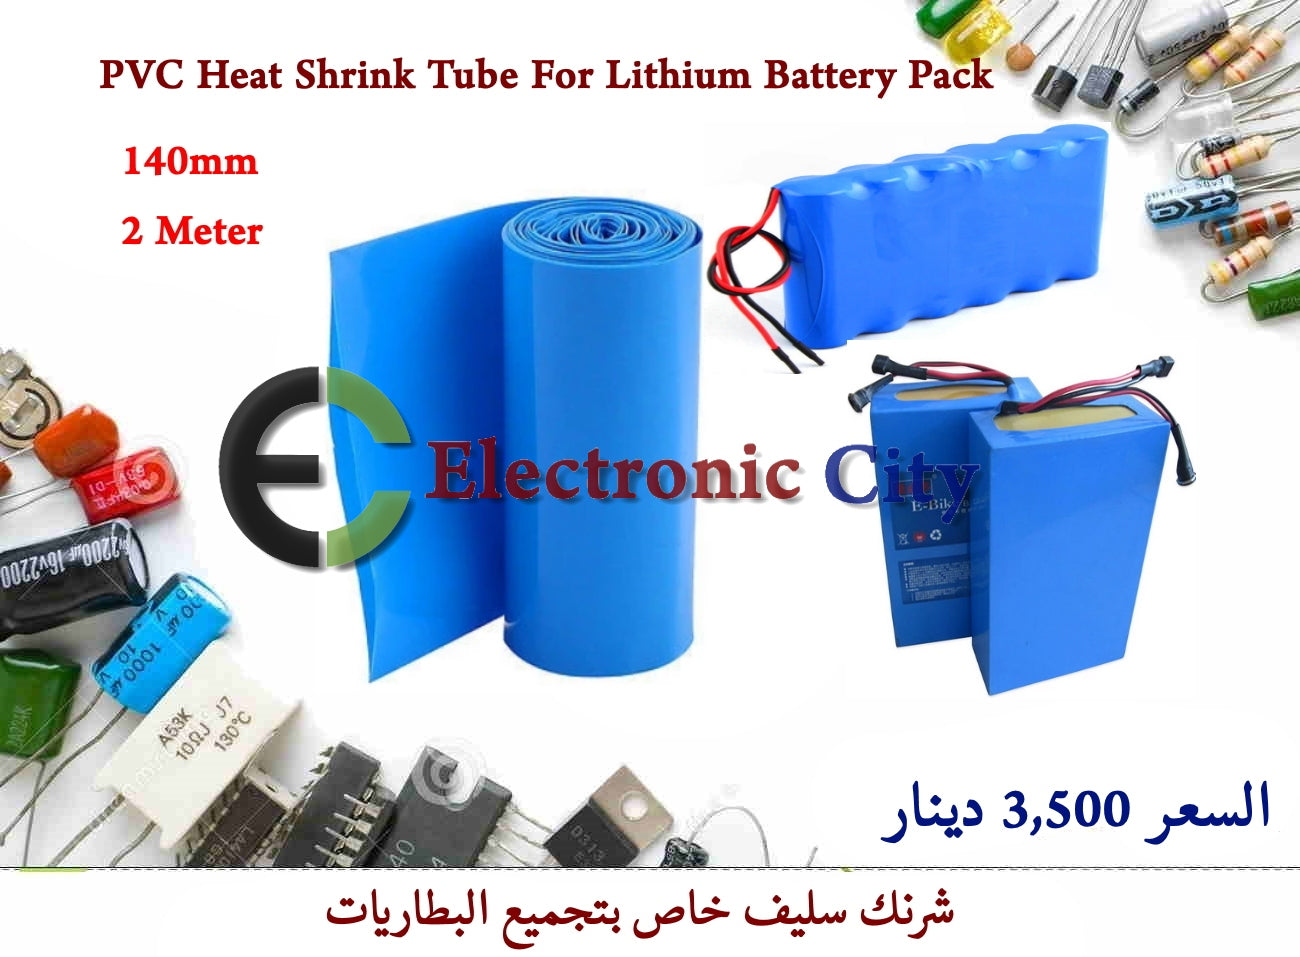 PVC Heat Shrink Tube 140mm 2Meter